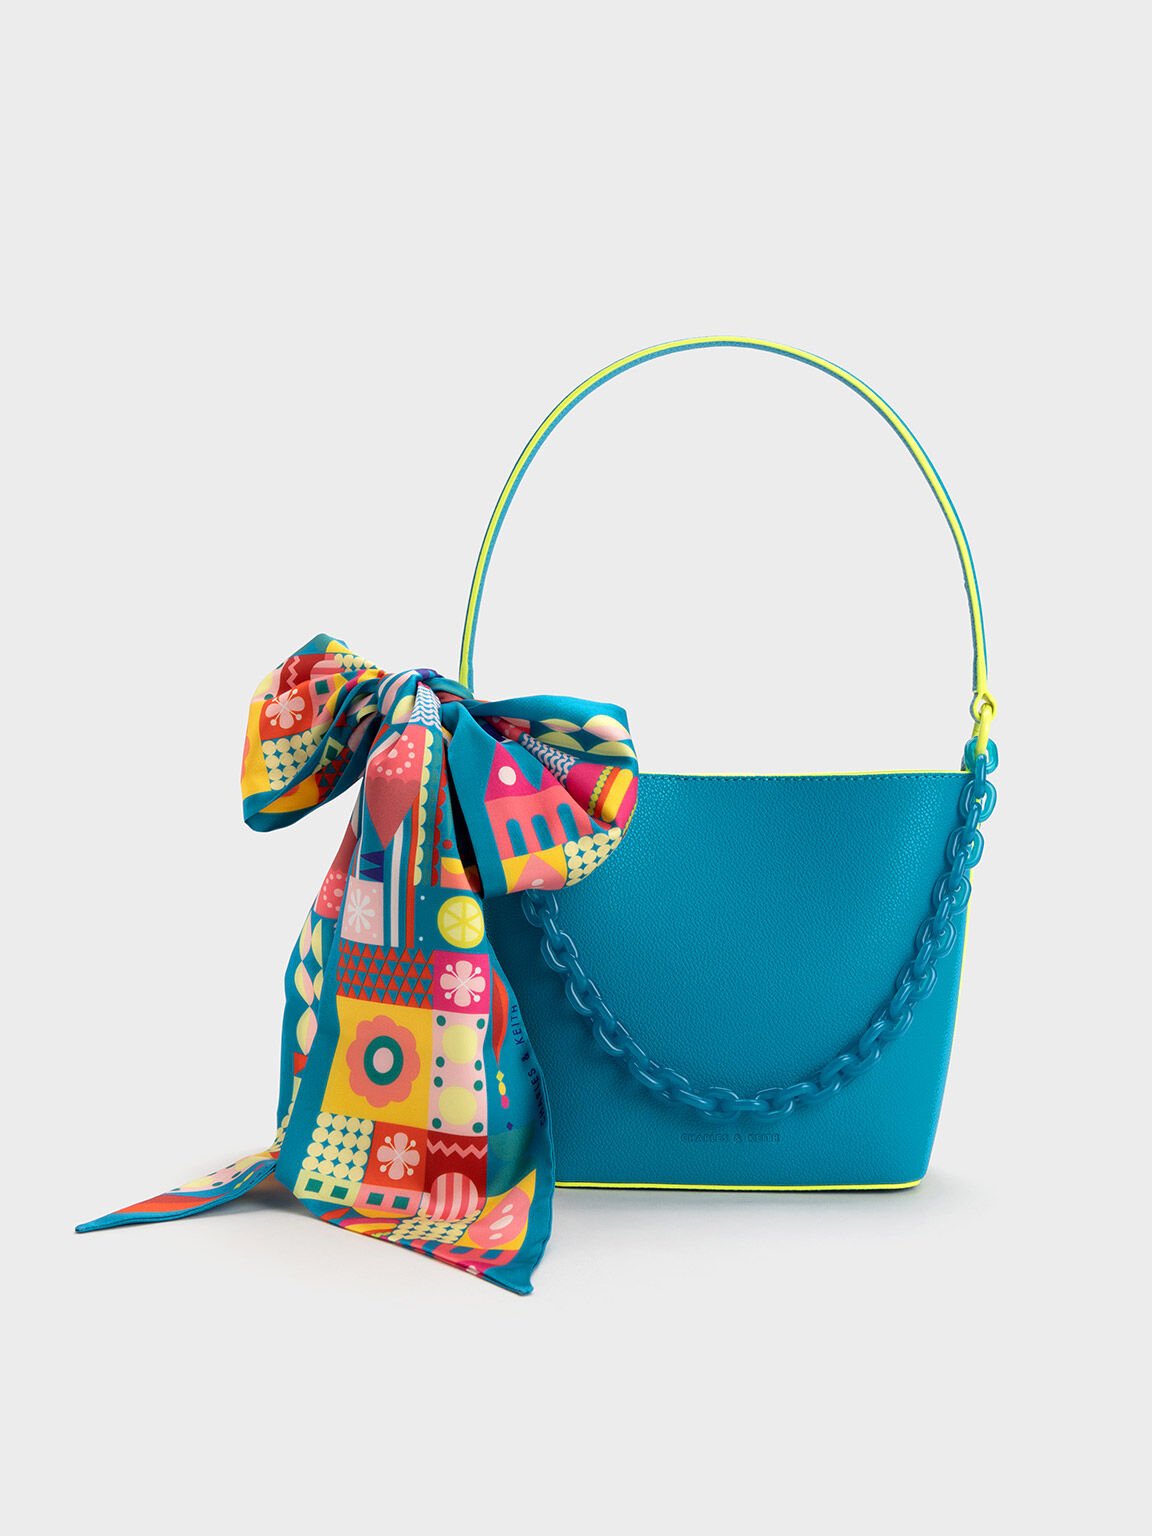 Handbag for Women and Girls casual Shoulder Bag Purse Pack of 4 New  latest Design Handbags